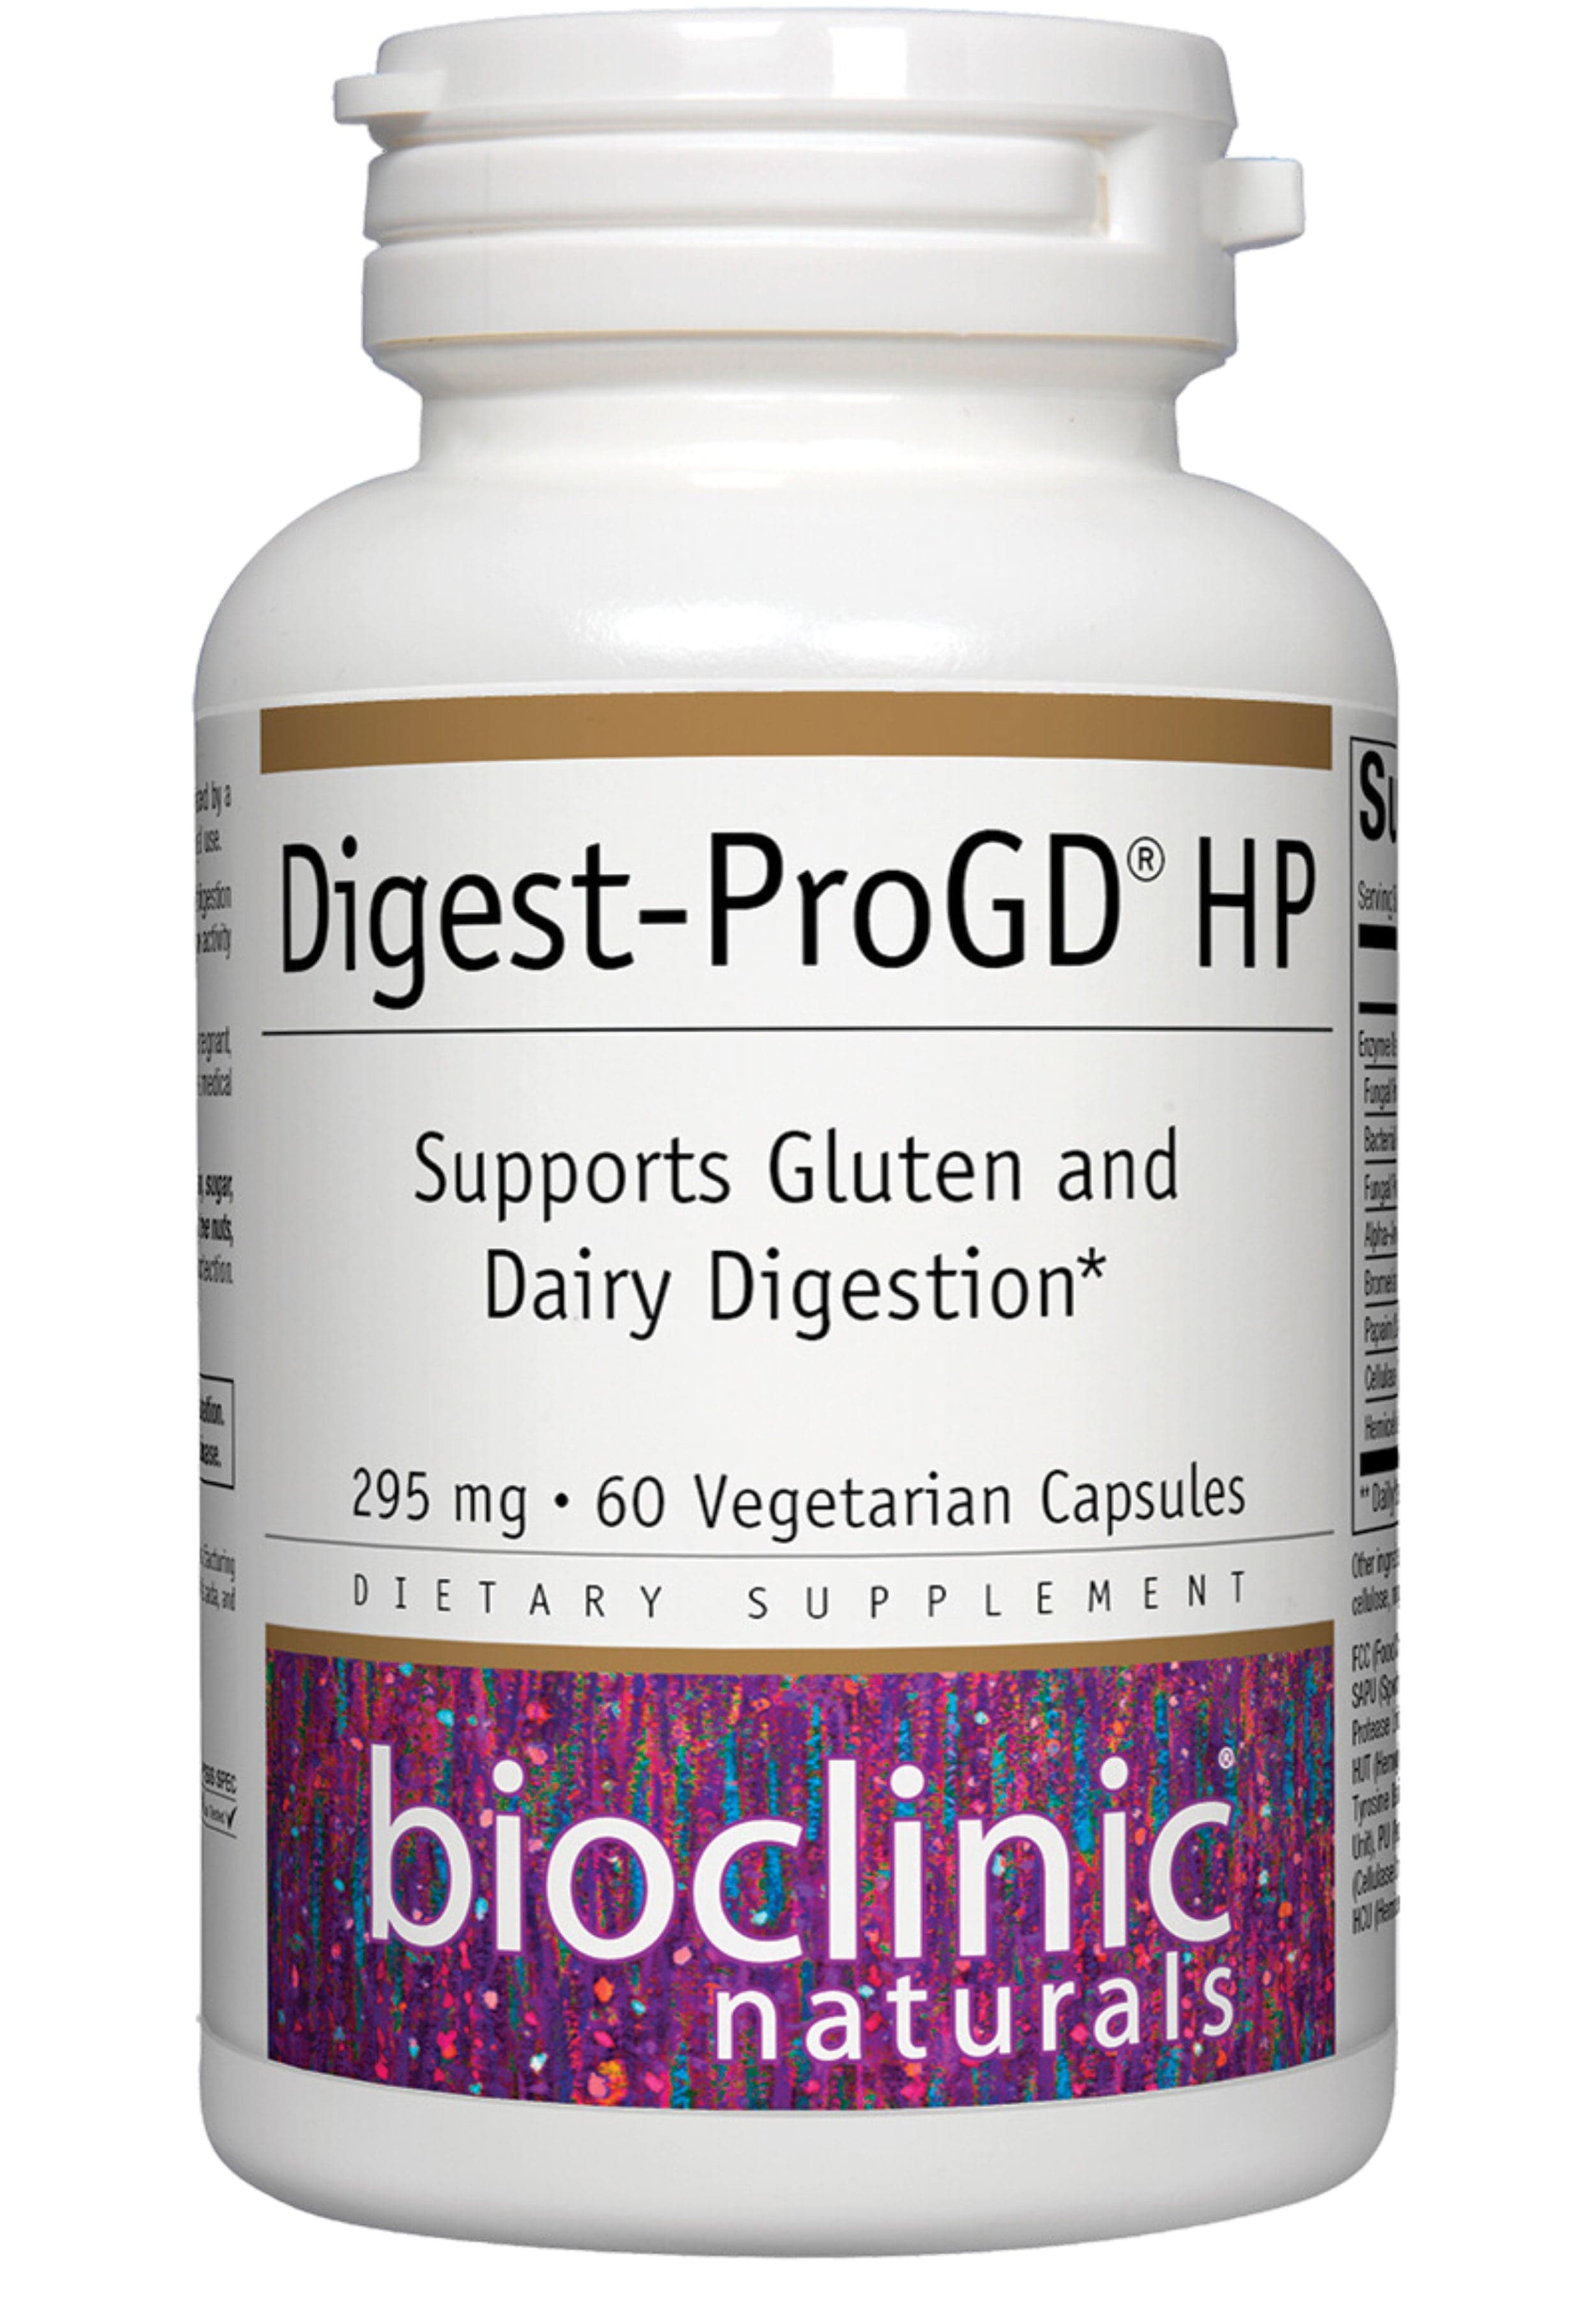 Bioclinic Naturals Digest-ProGD HP